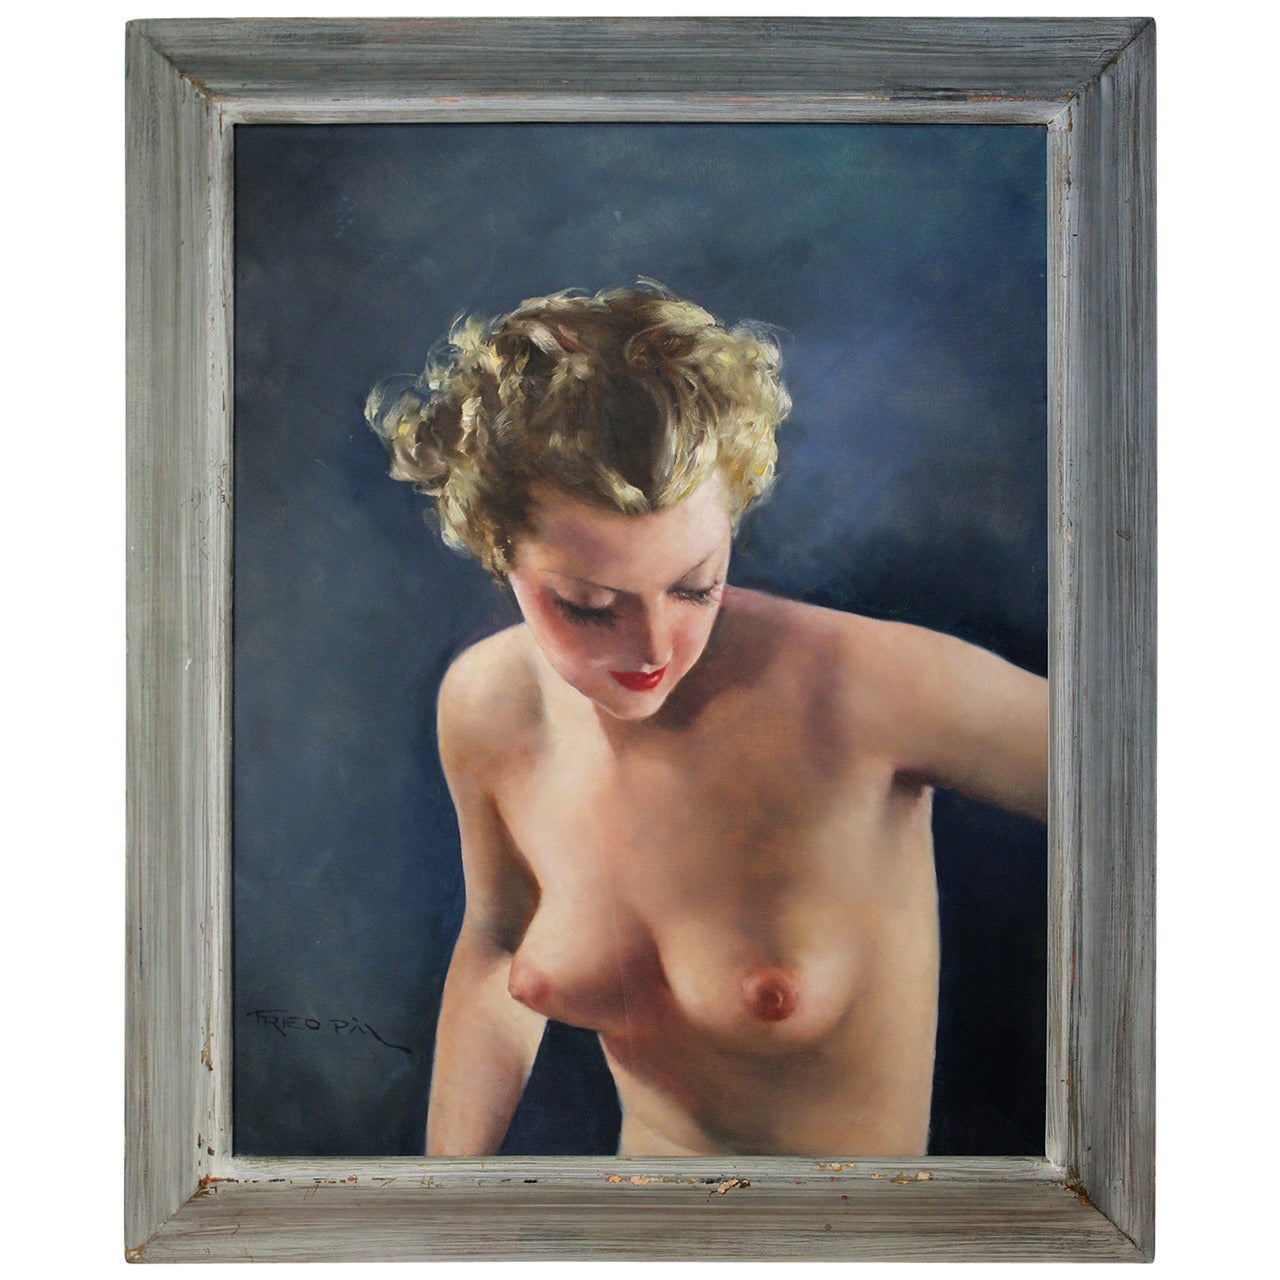 Pal Fried Nude Portrait Oil on Canvas